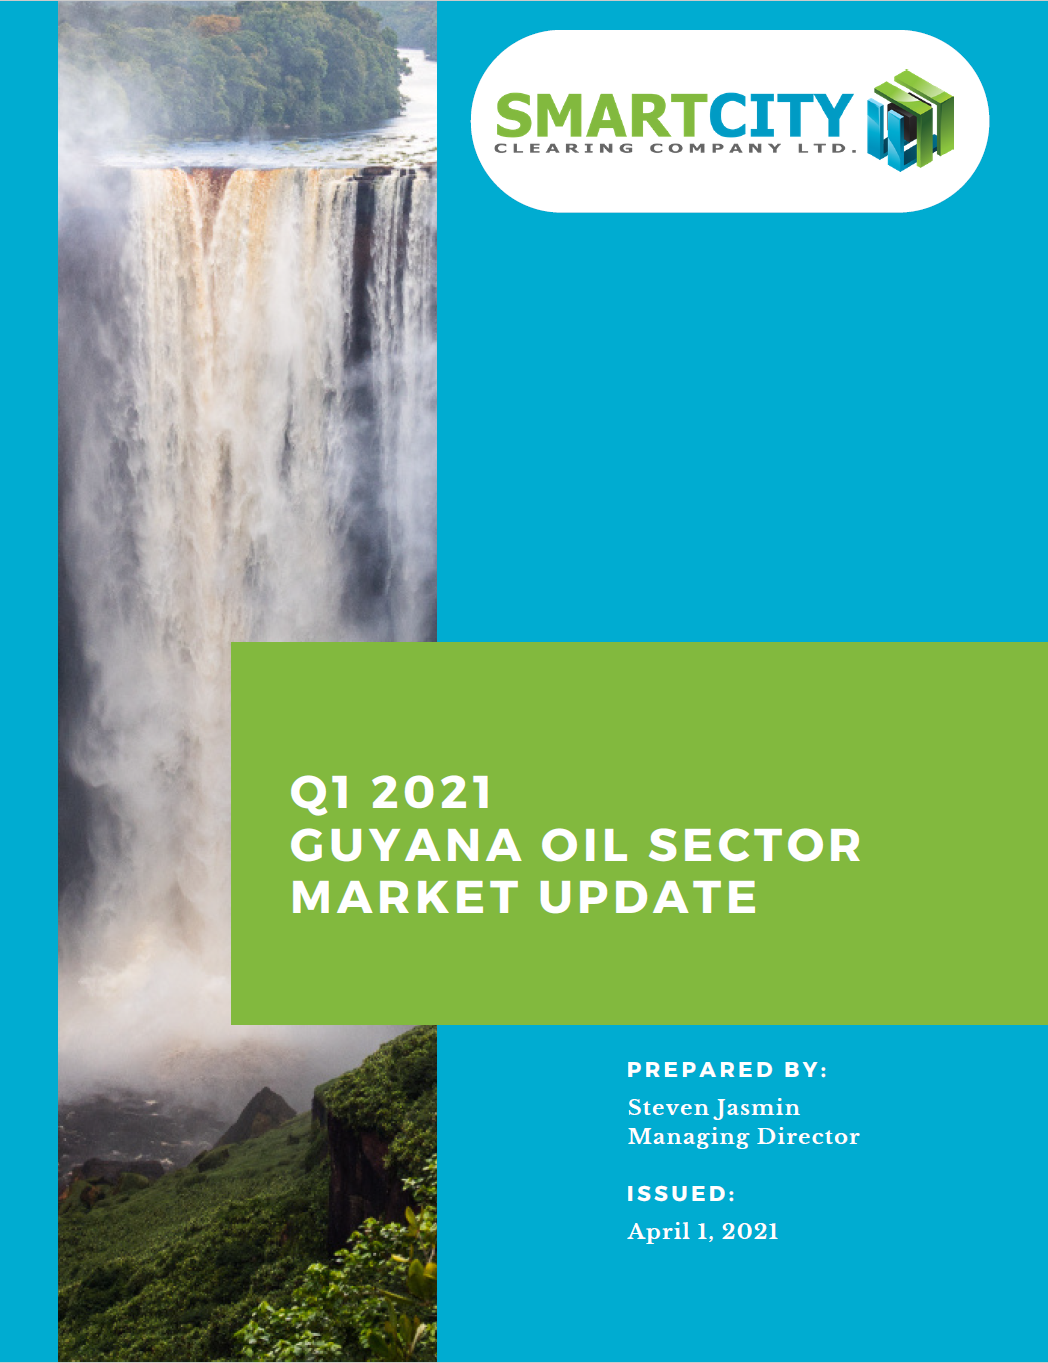 Q1 2021 Guyana Oil Sector Market Update by Sc3 Managing Director Steven Jasmin